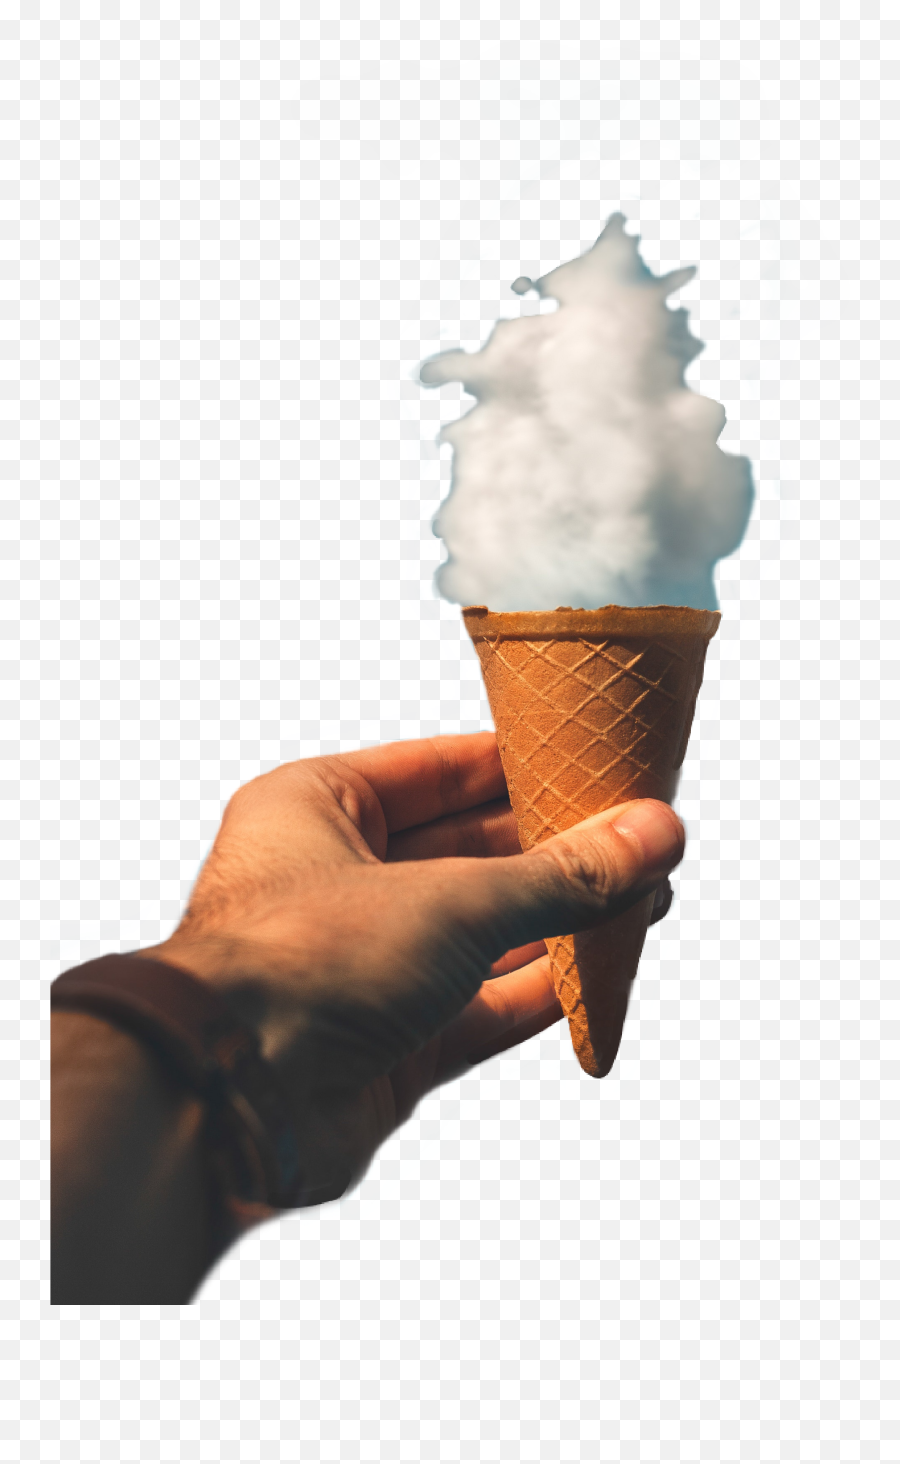 Cone Icecream Cloud - Hand With Ice Cream Cone Transparent Background Emoji,Ice Cream Cloud Emoji